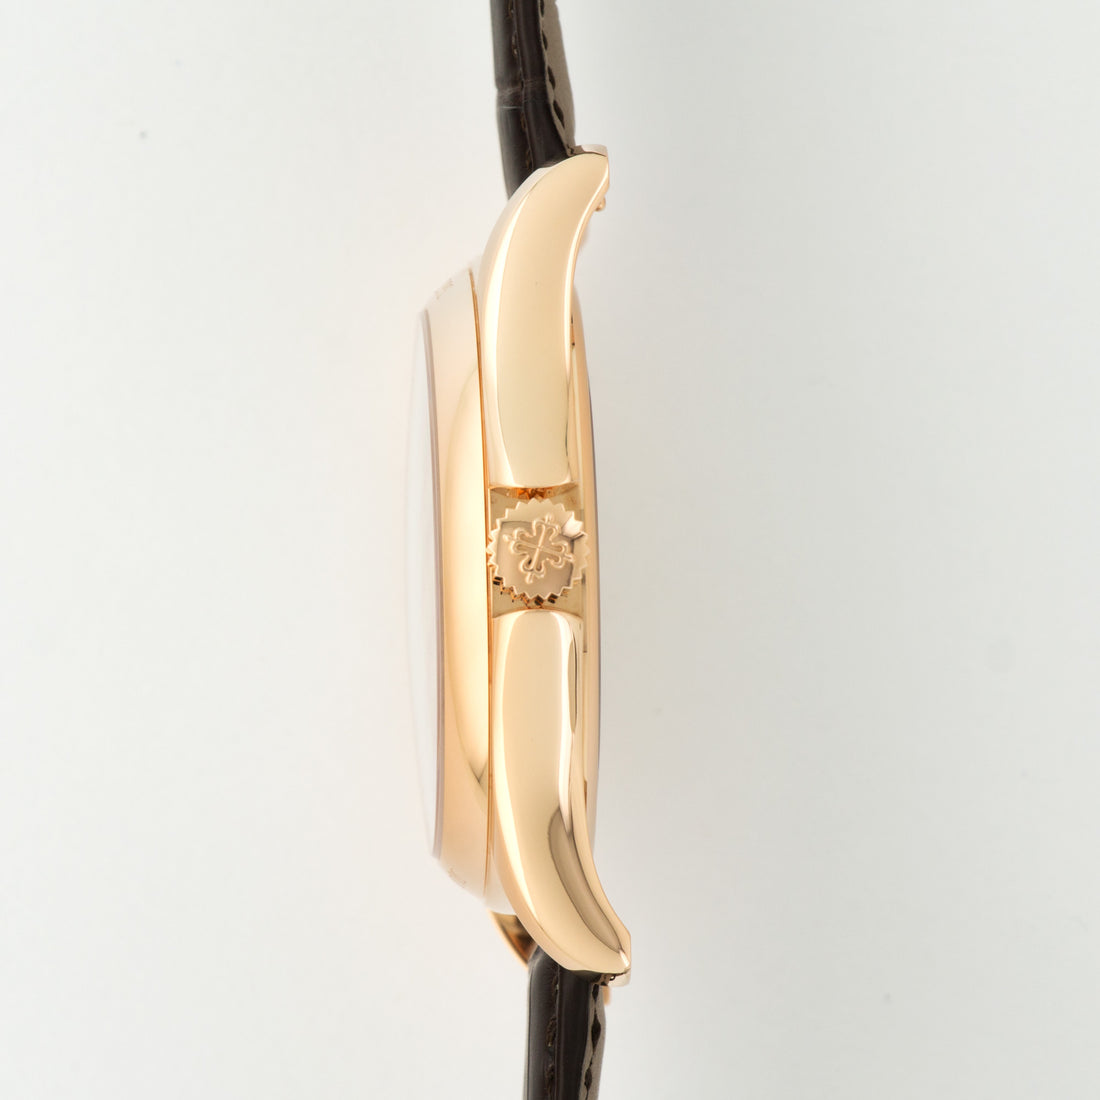 Patek Philippe Rose Gold World Time Cloisonne Watch Ref. 5131